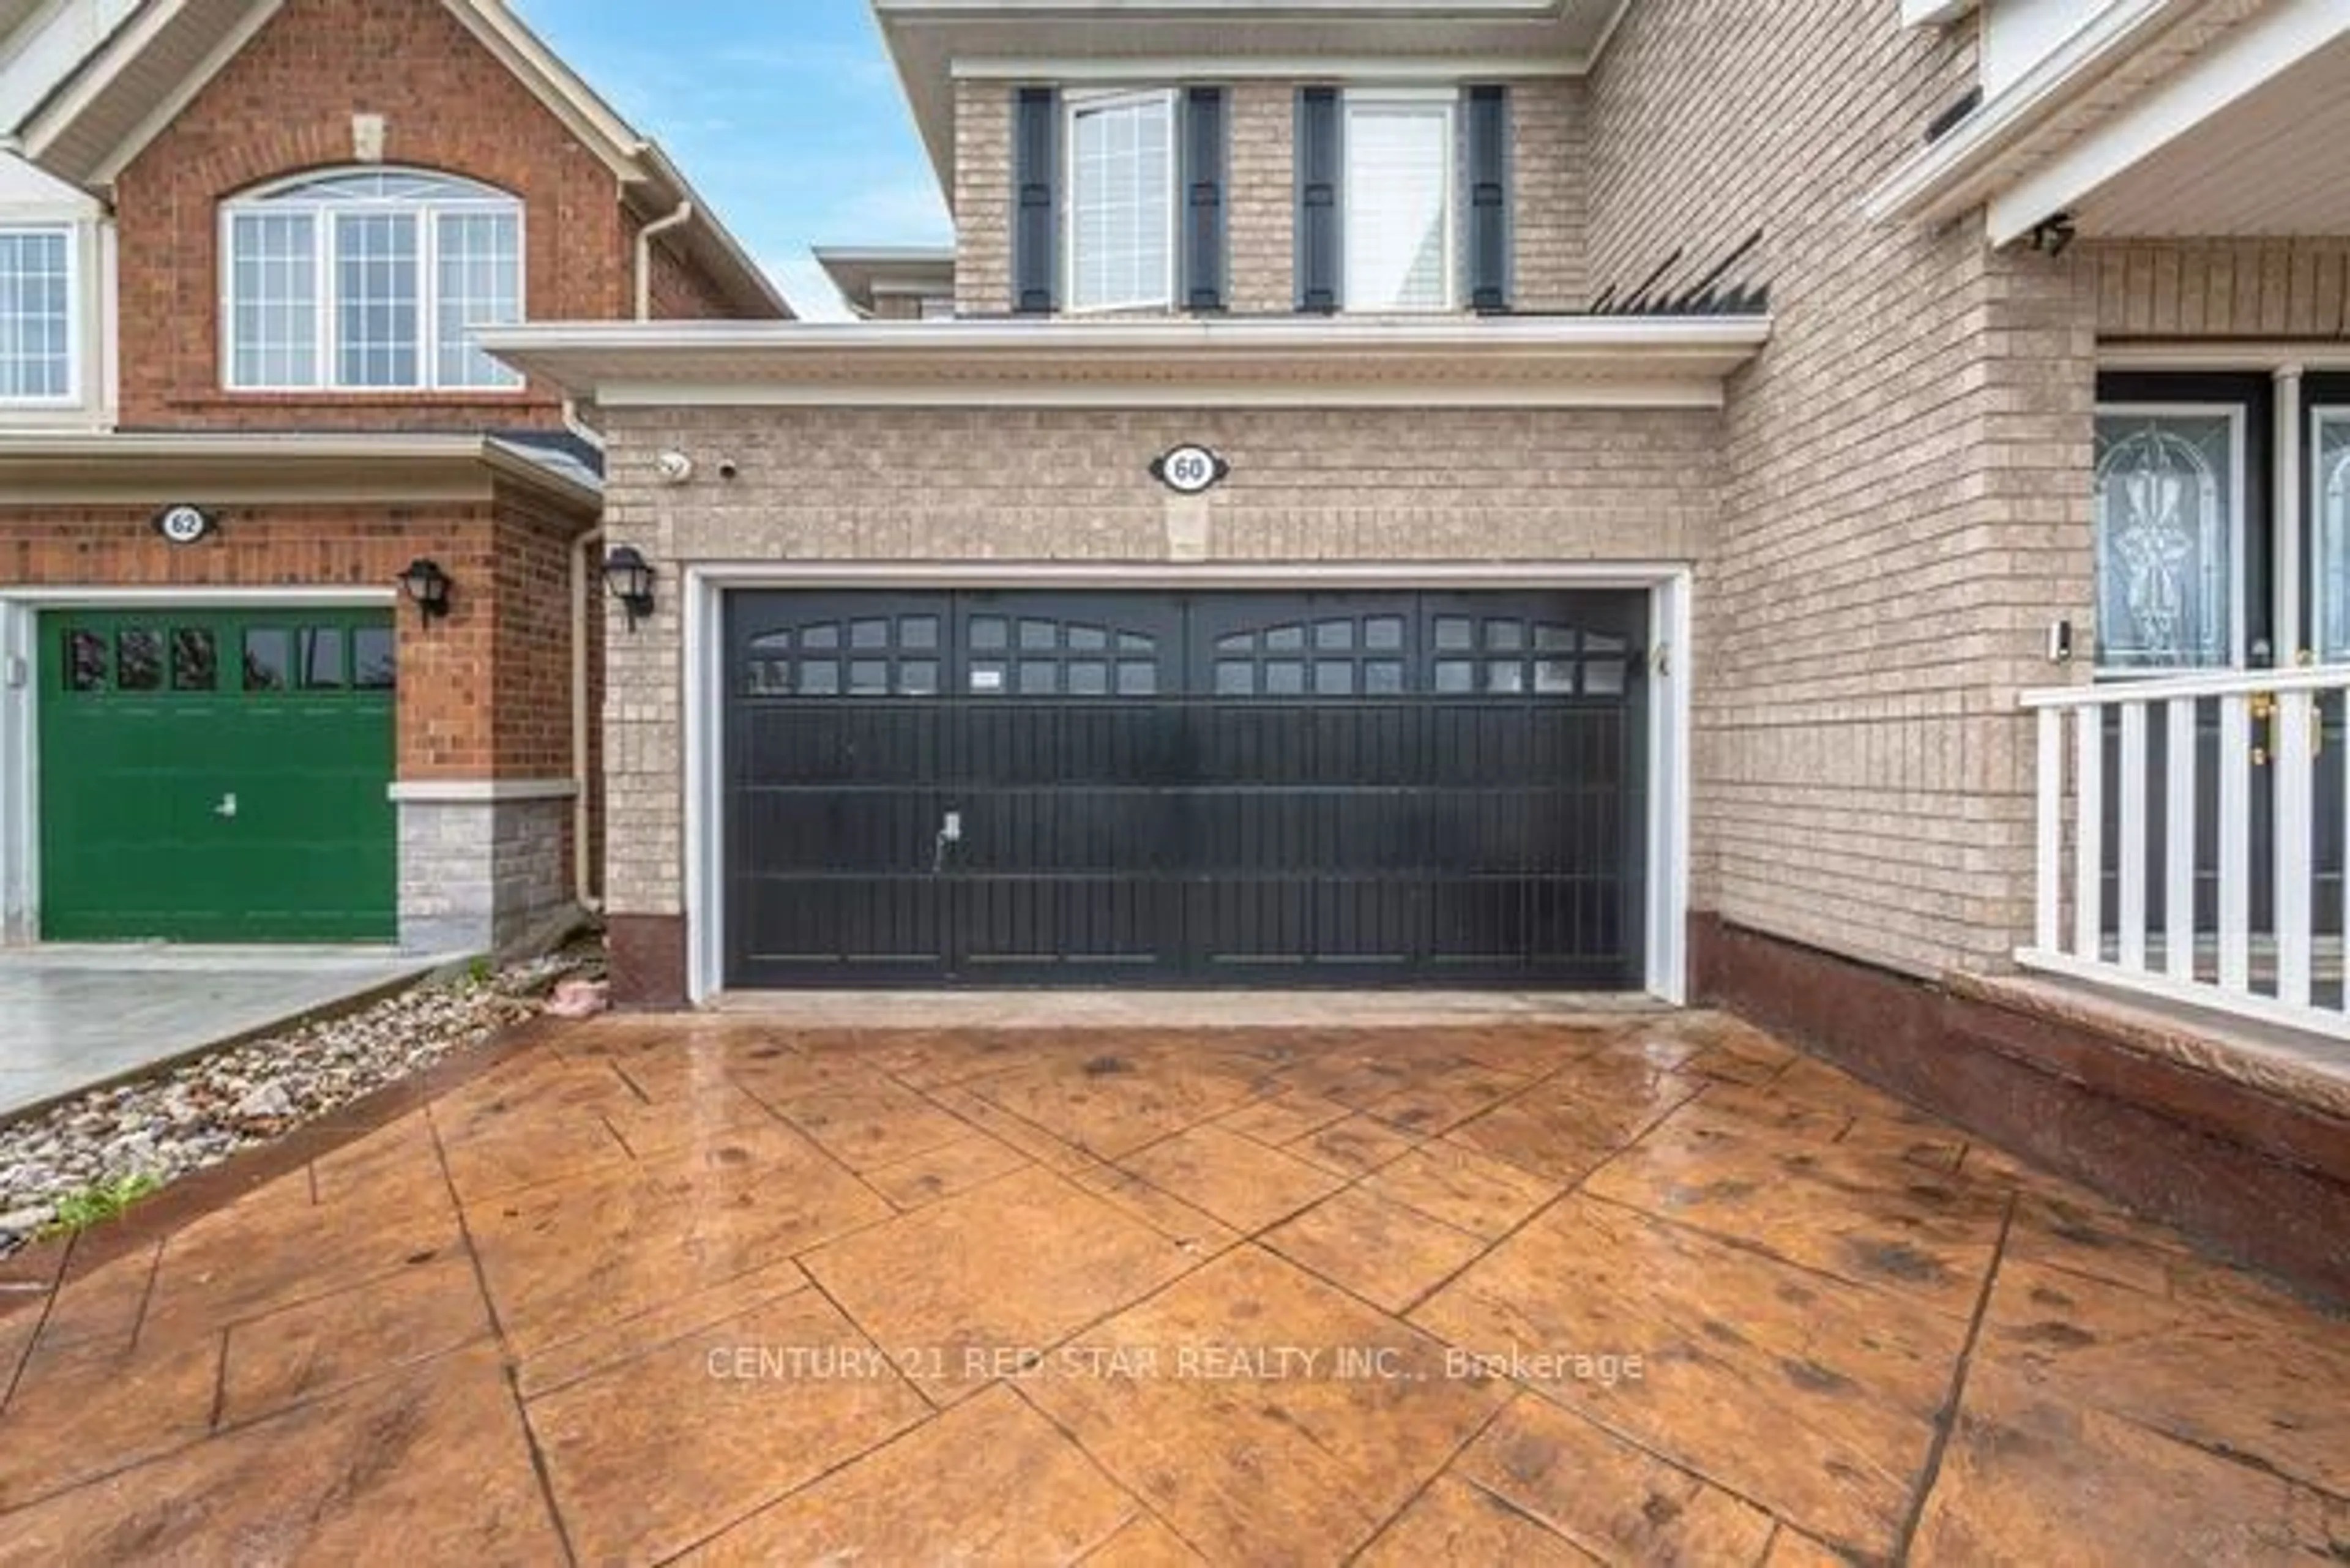 Home with brick exterior material for 60 Horizon St, Brampton Ontario L6P 2J1